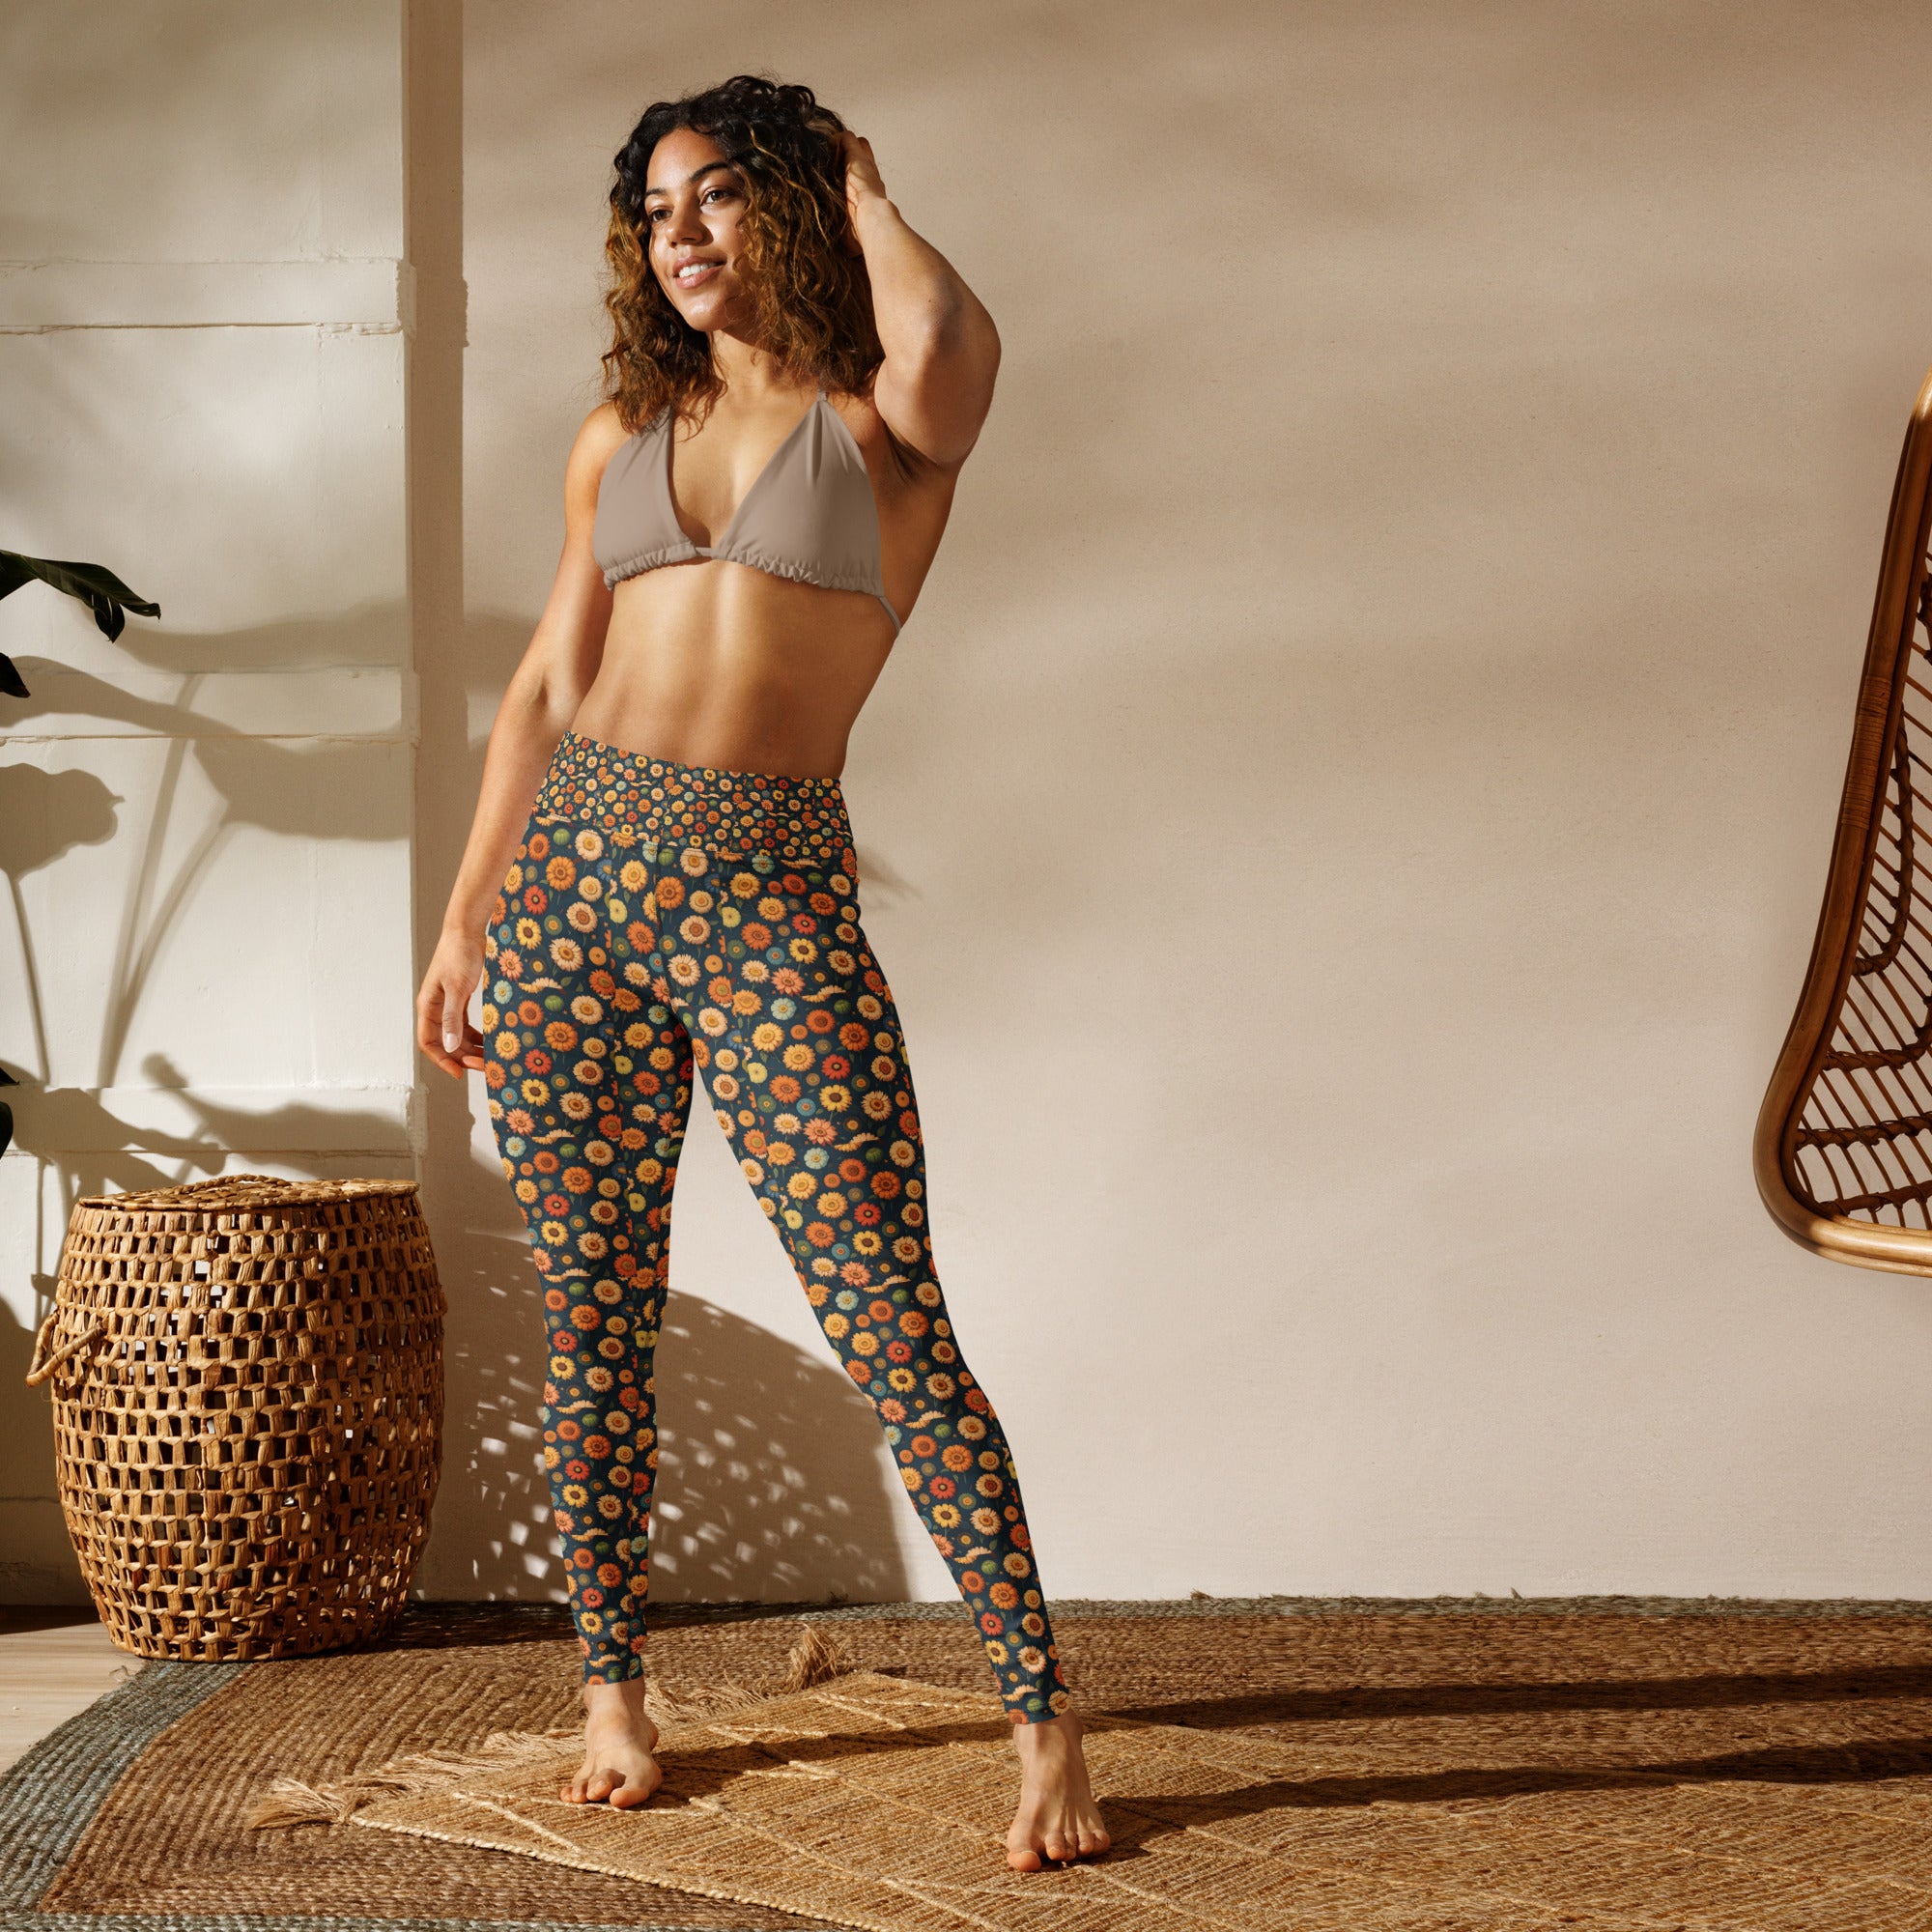 Hot Honeycomb Printed Yoga Pants Women Push Up Sport Leggings – Trending  Accessories | High waist sports leggings, Yoga pants women, Tights workout